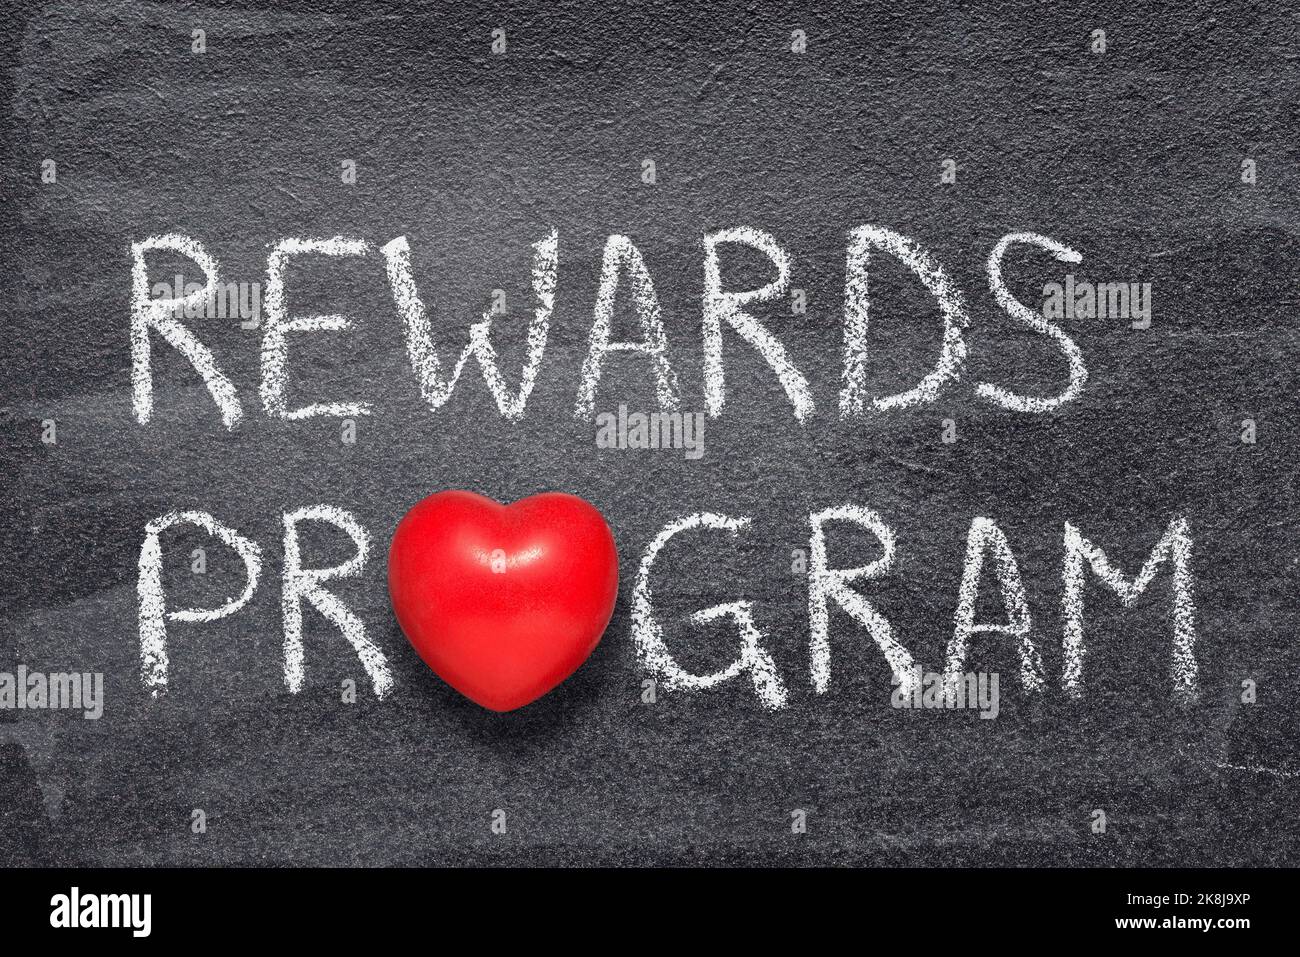 rewards program phrase written on chalkboard with red heart symbol Stock Photo